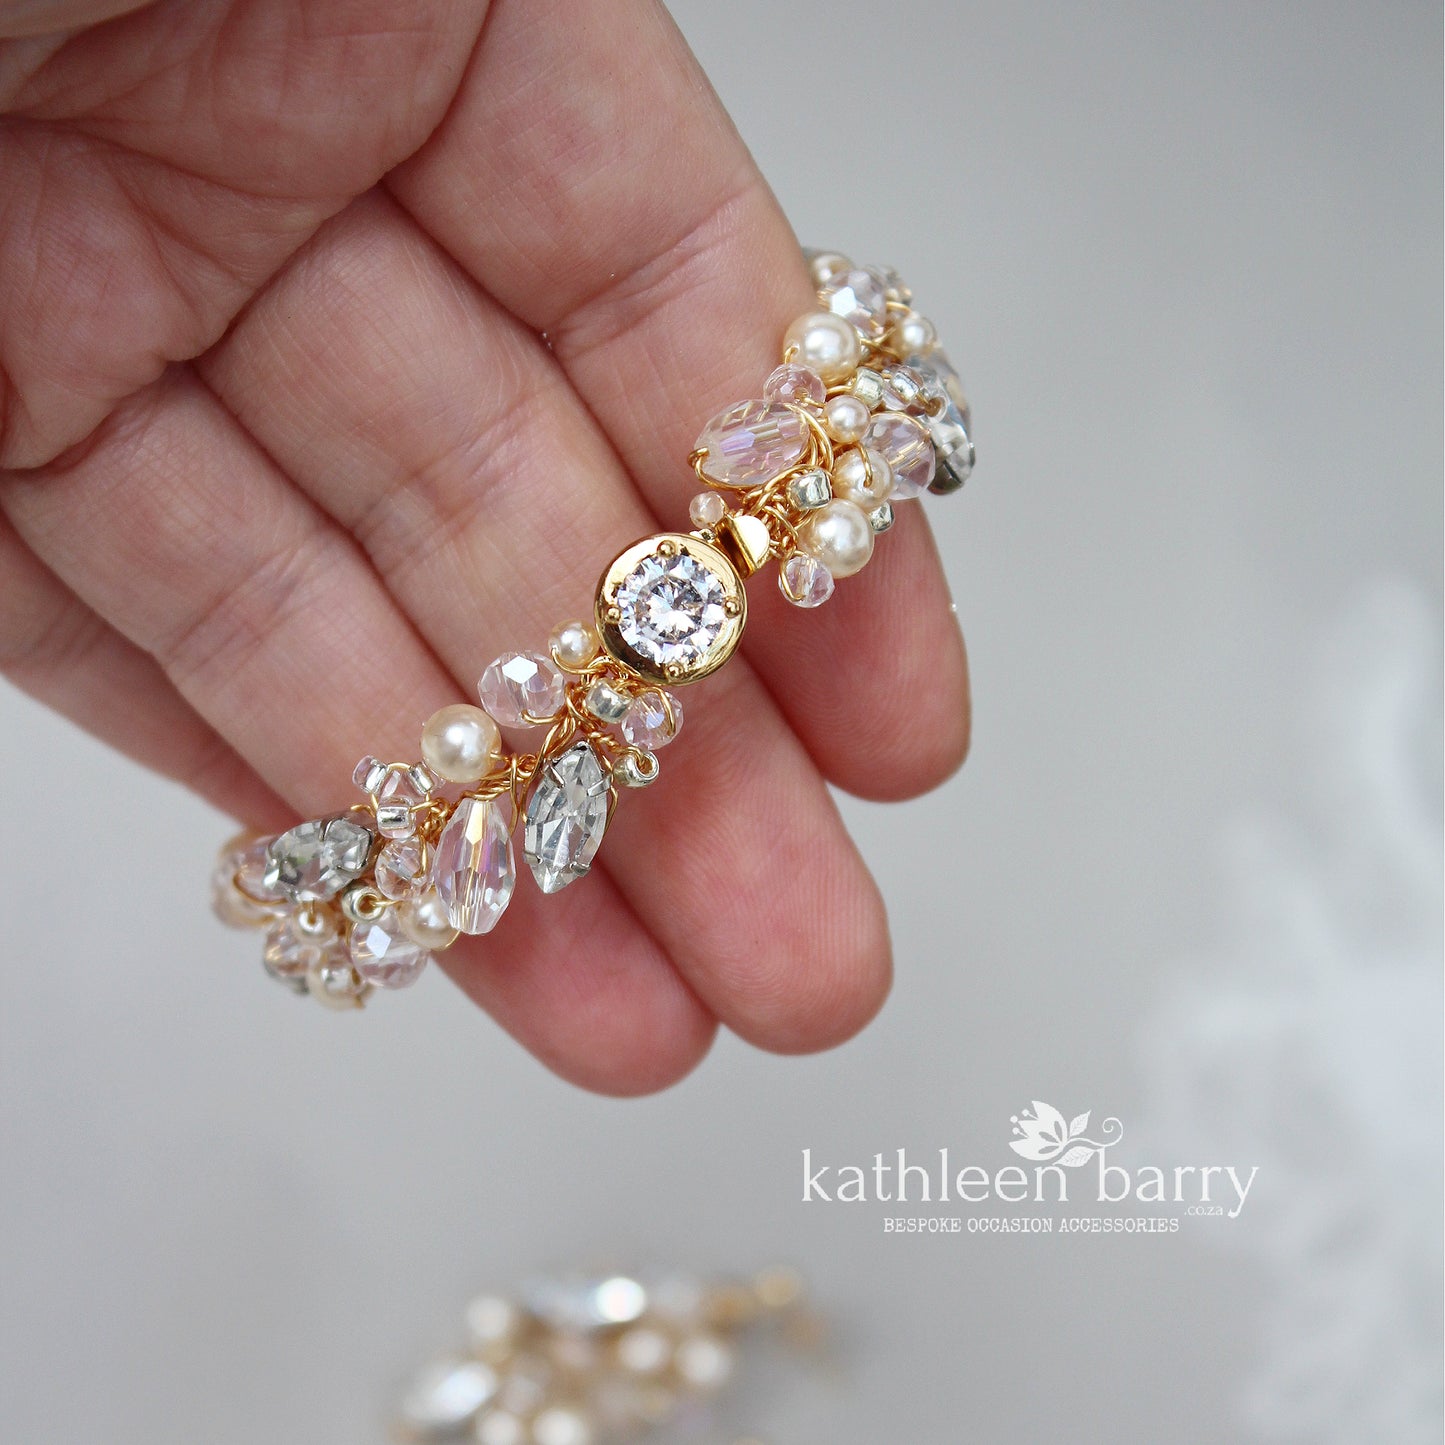 Mini Adele bracelet - rhinestone, crystal & pearl - Rose gold, gold or silver,